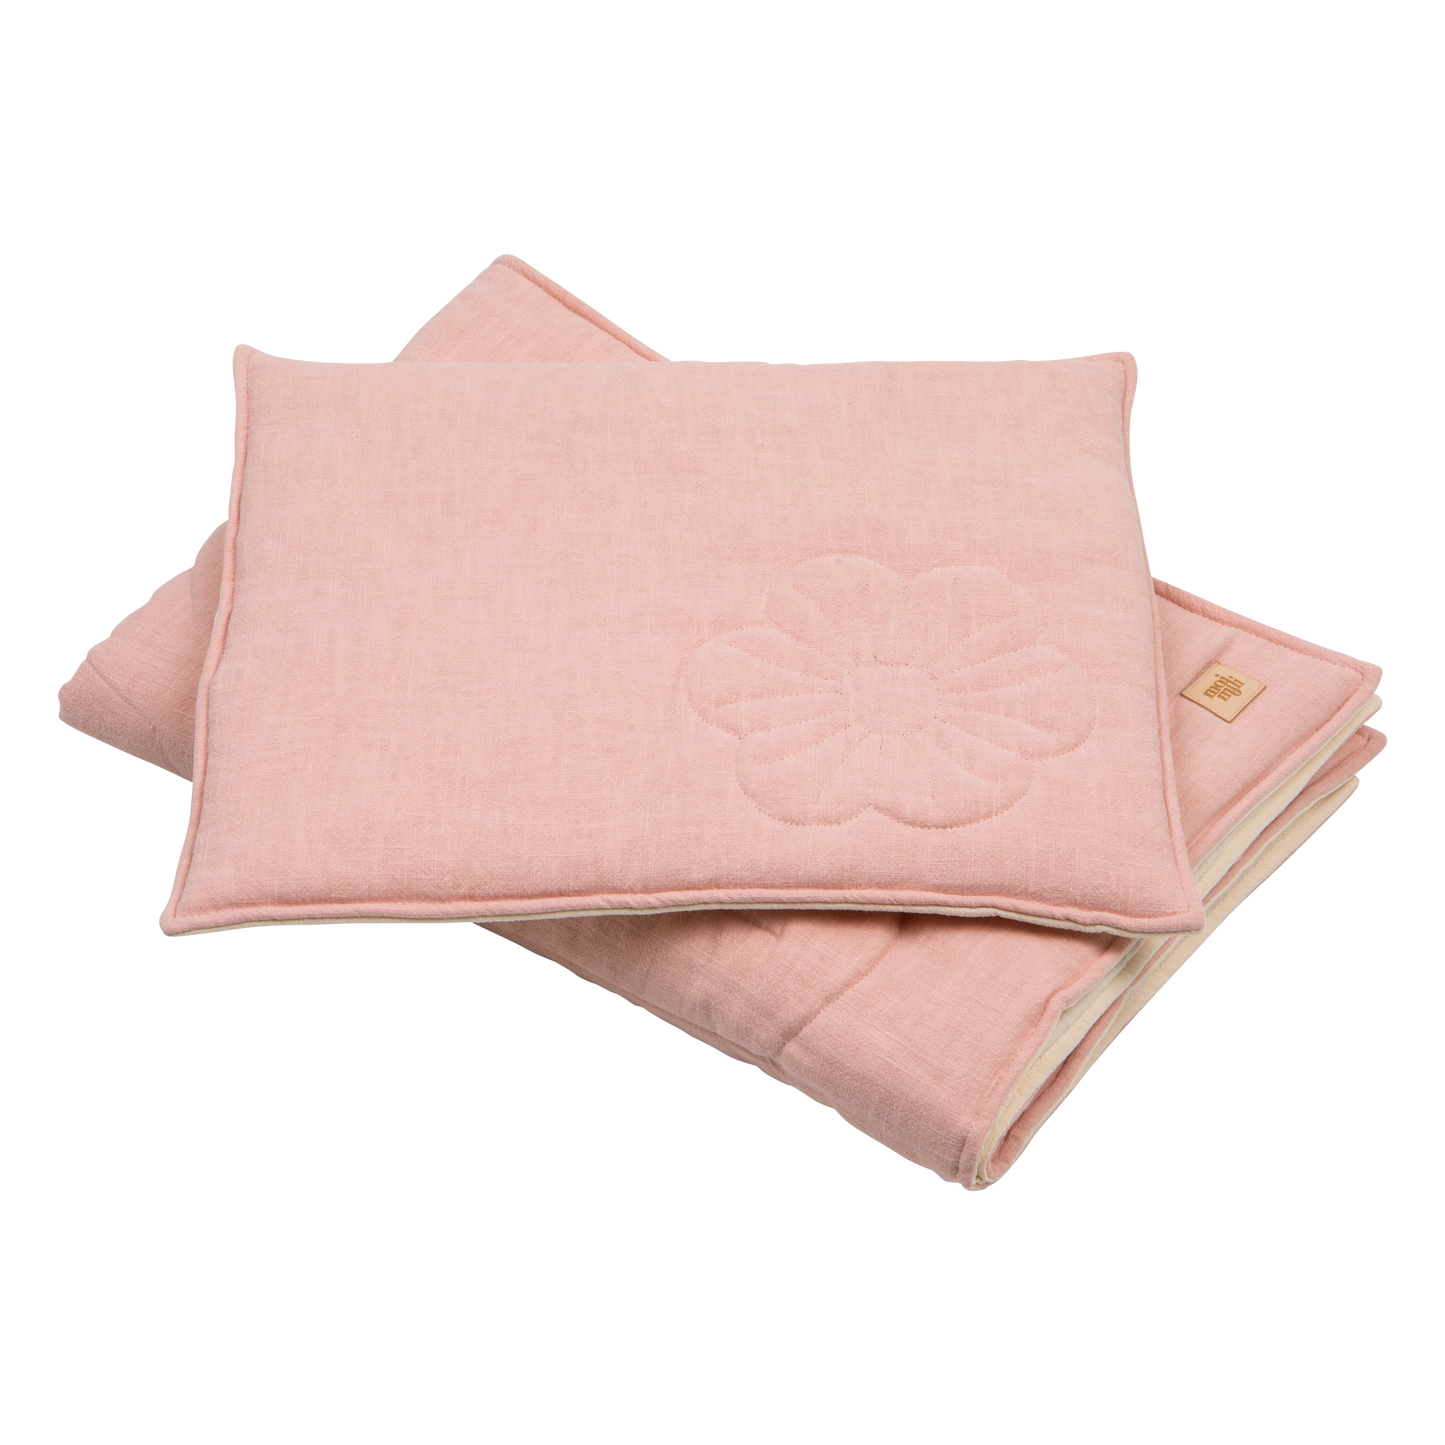 Linen "Light Pink" Flower Child Cover Set